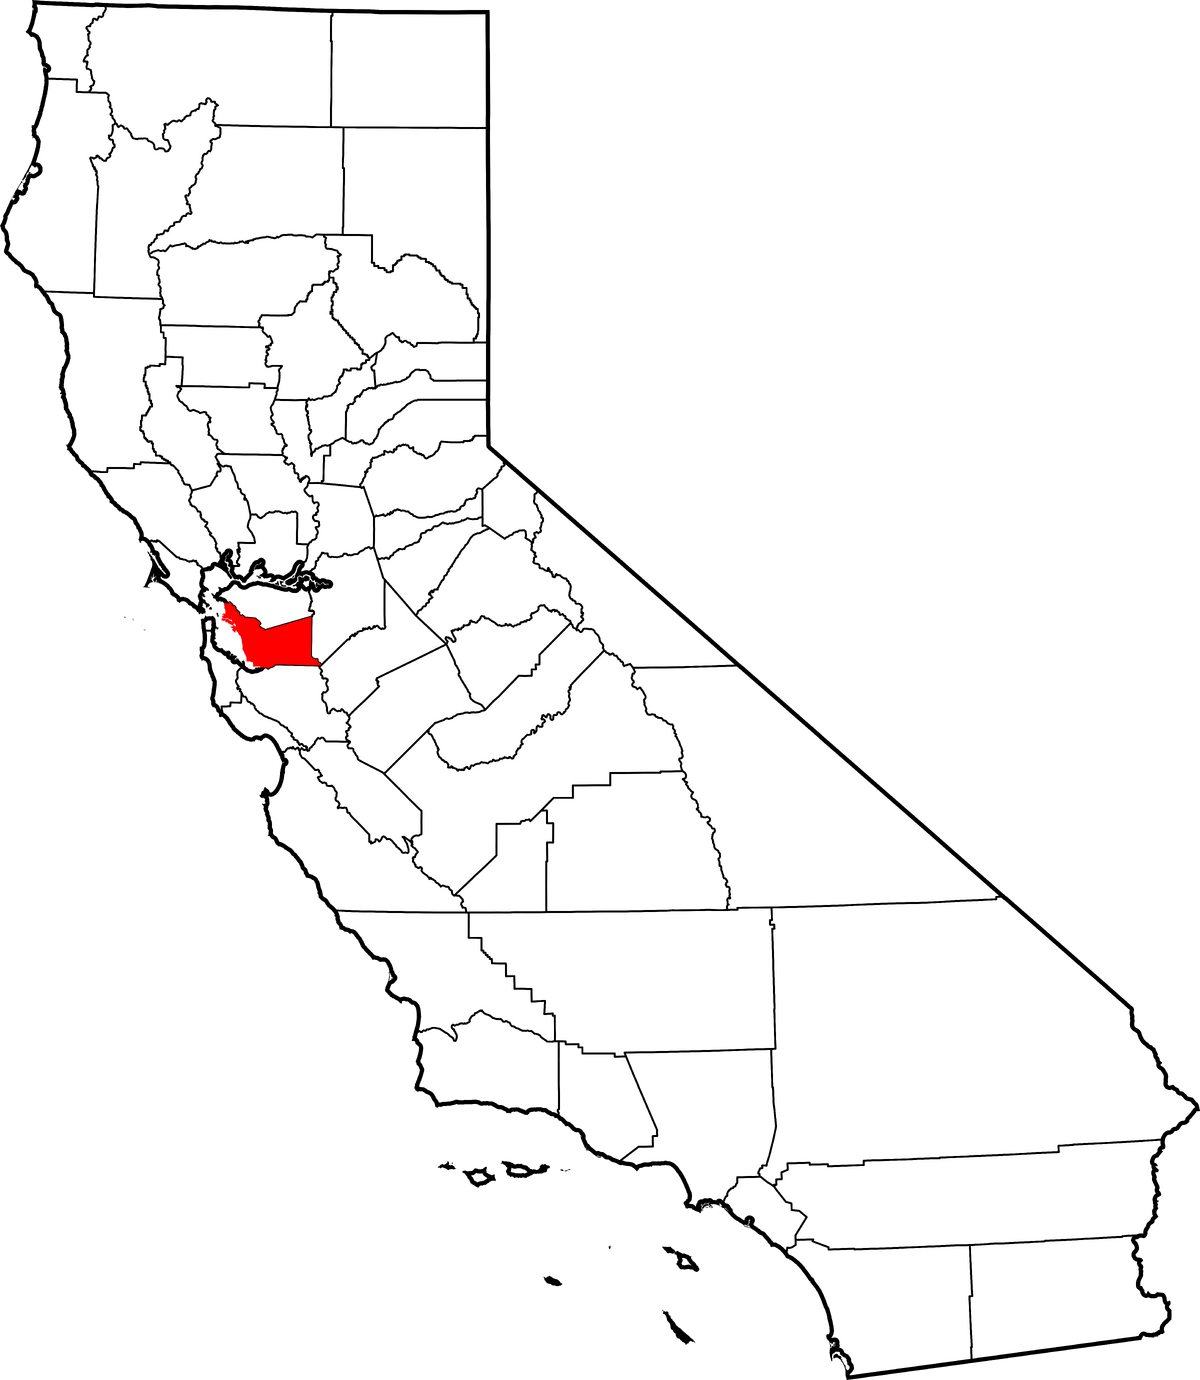 Joaquin diaz - Hayward, California, United States, Professional Profile